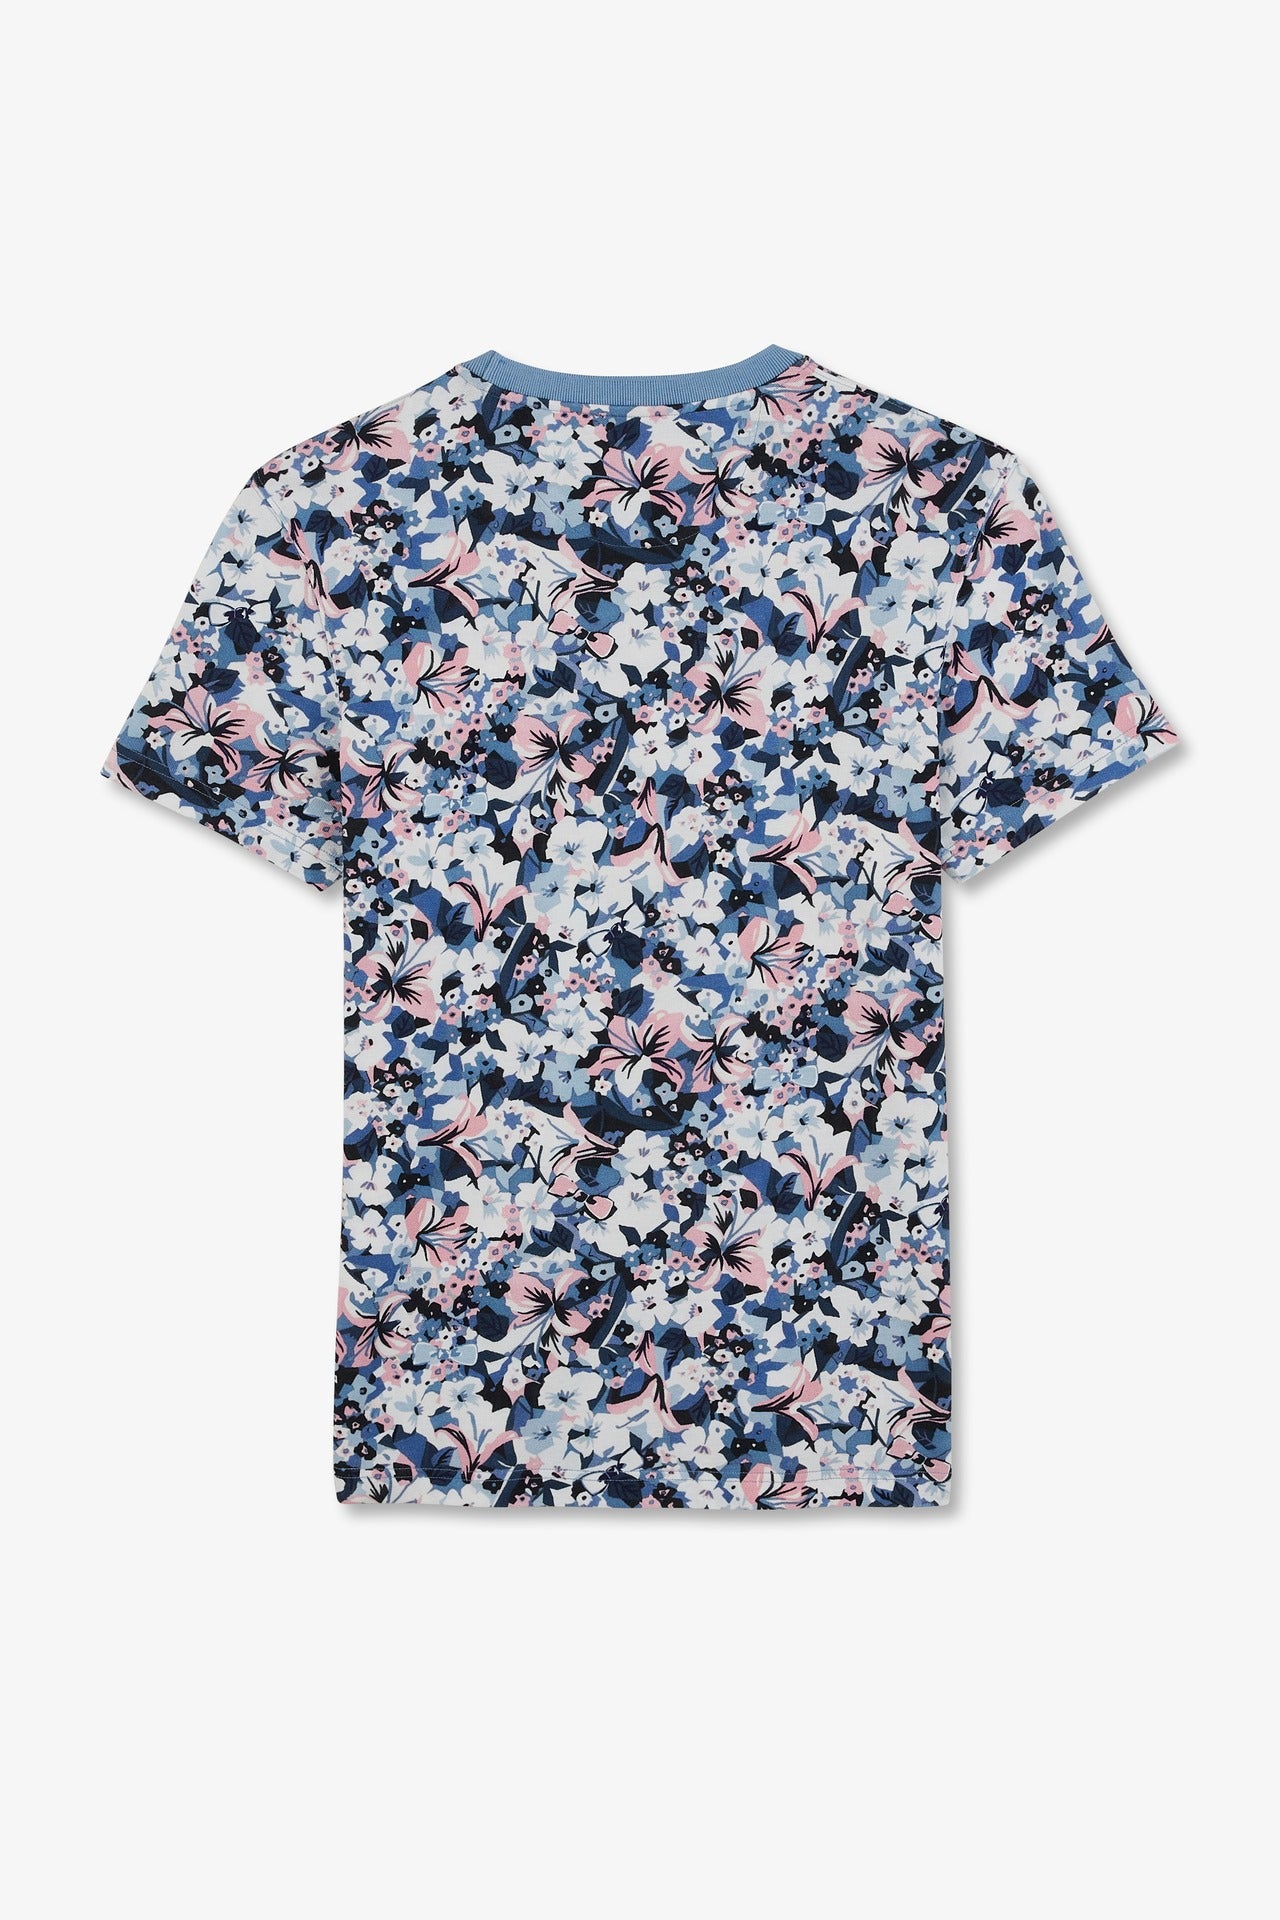 T-shirt bleu en coton piqué imprimé fleuri